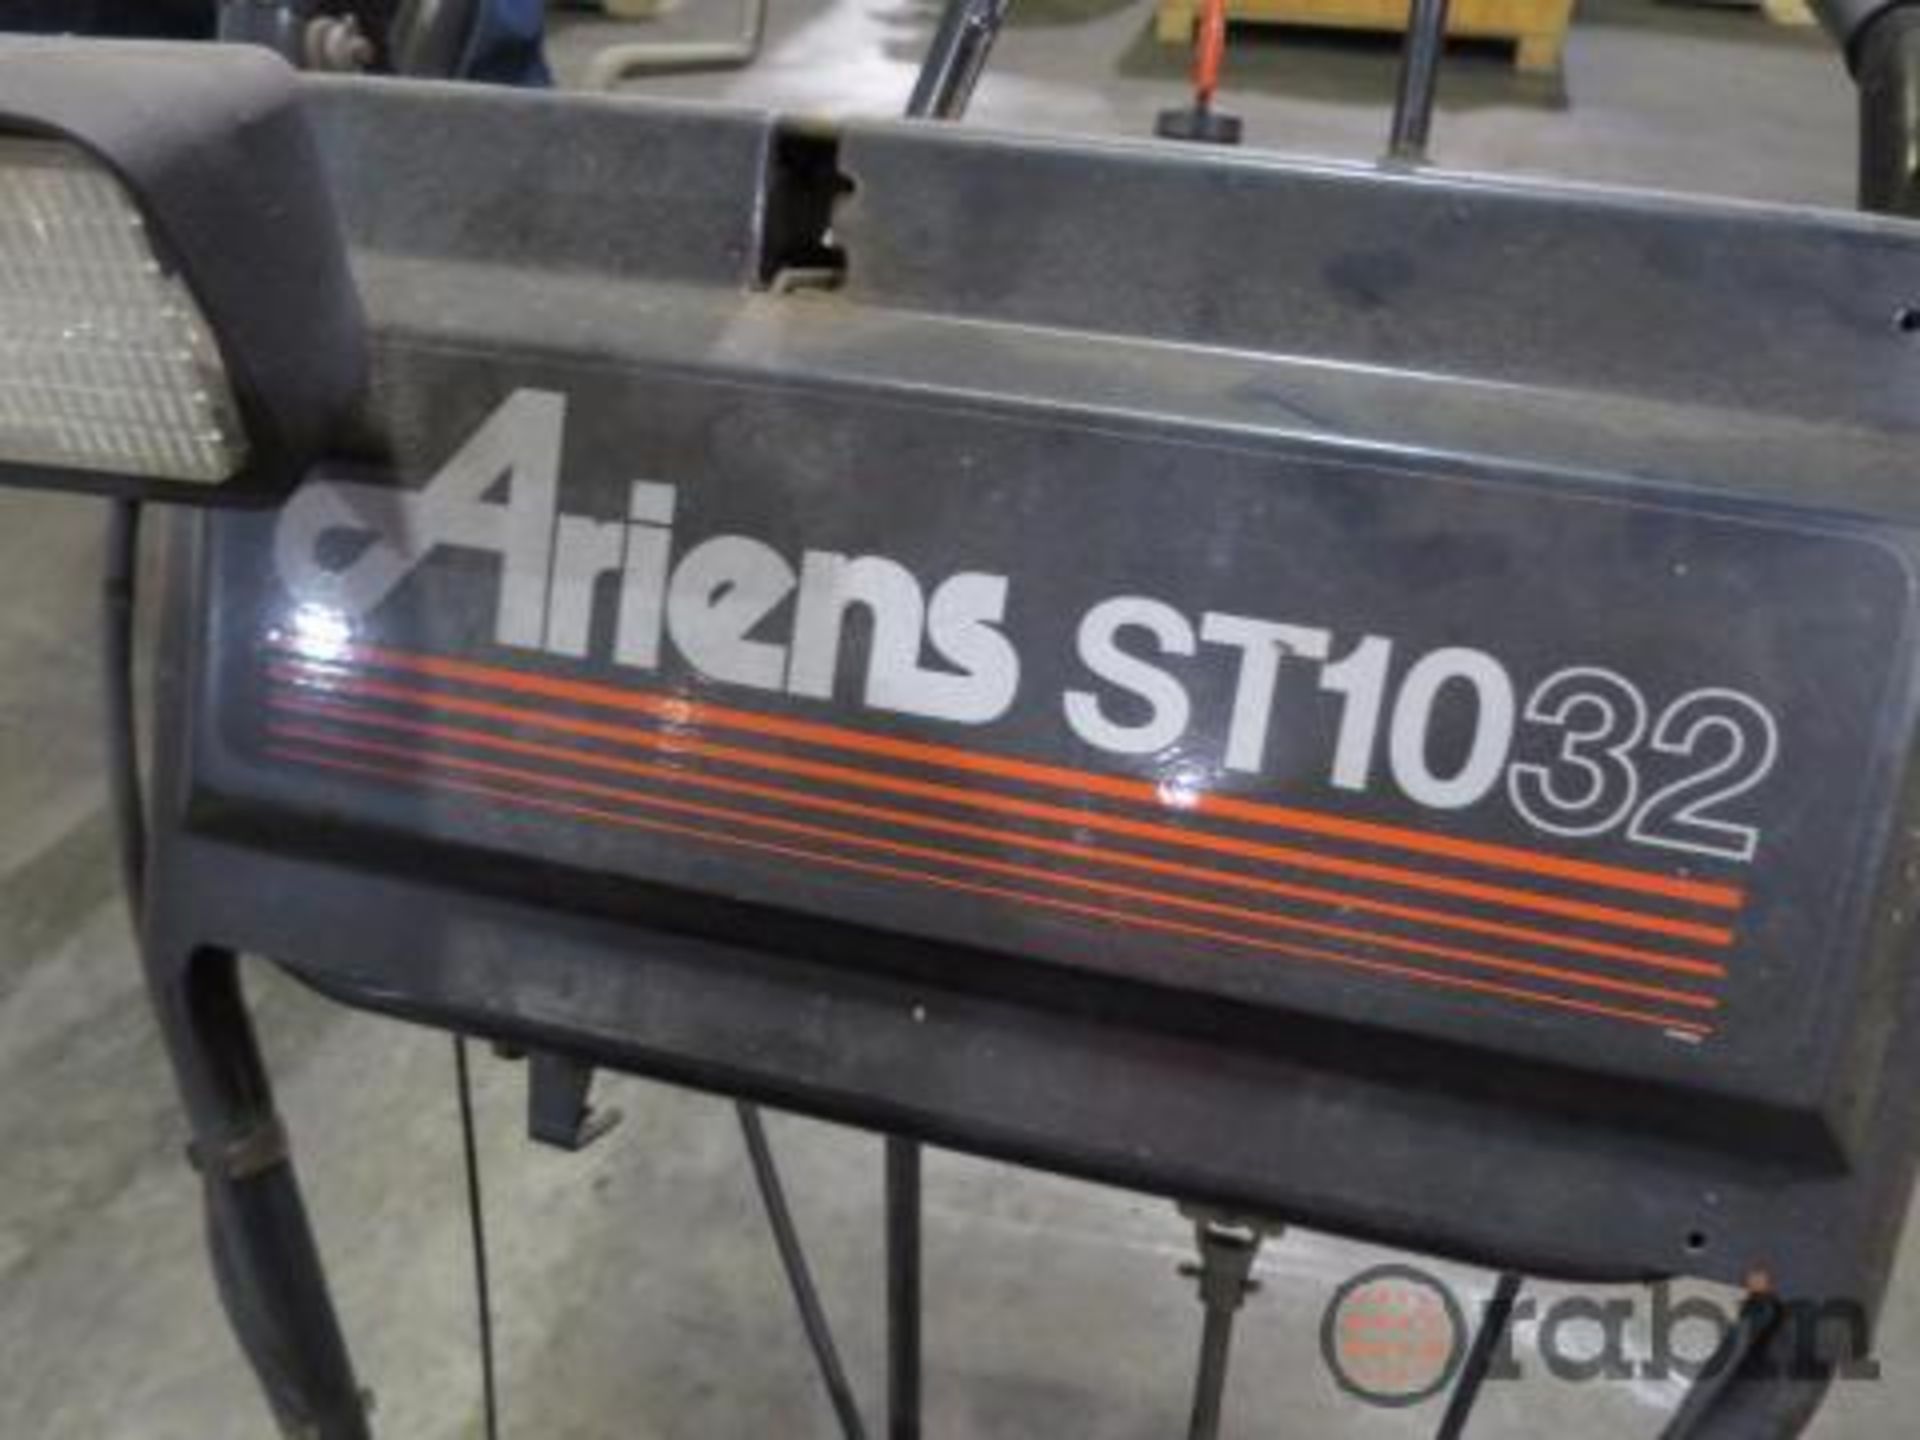 Ariens model ST1032 snowblower, gas powered [Atlanta] - Image 3 of 3